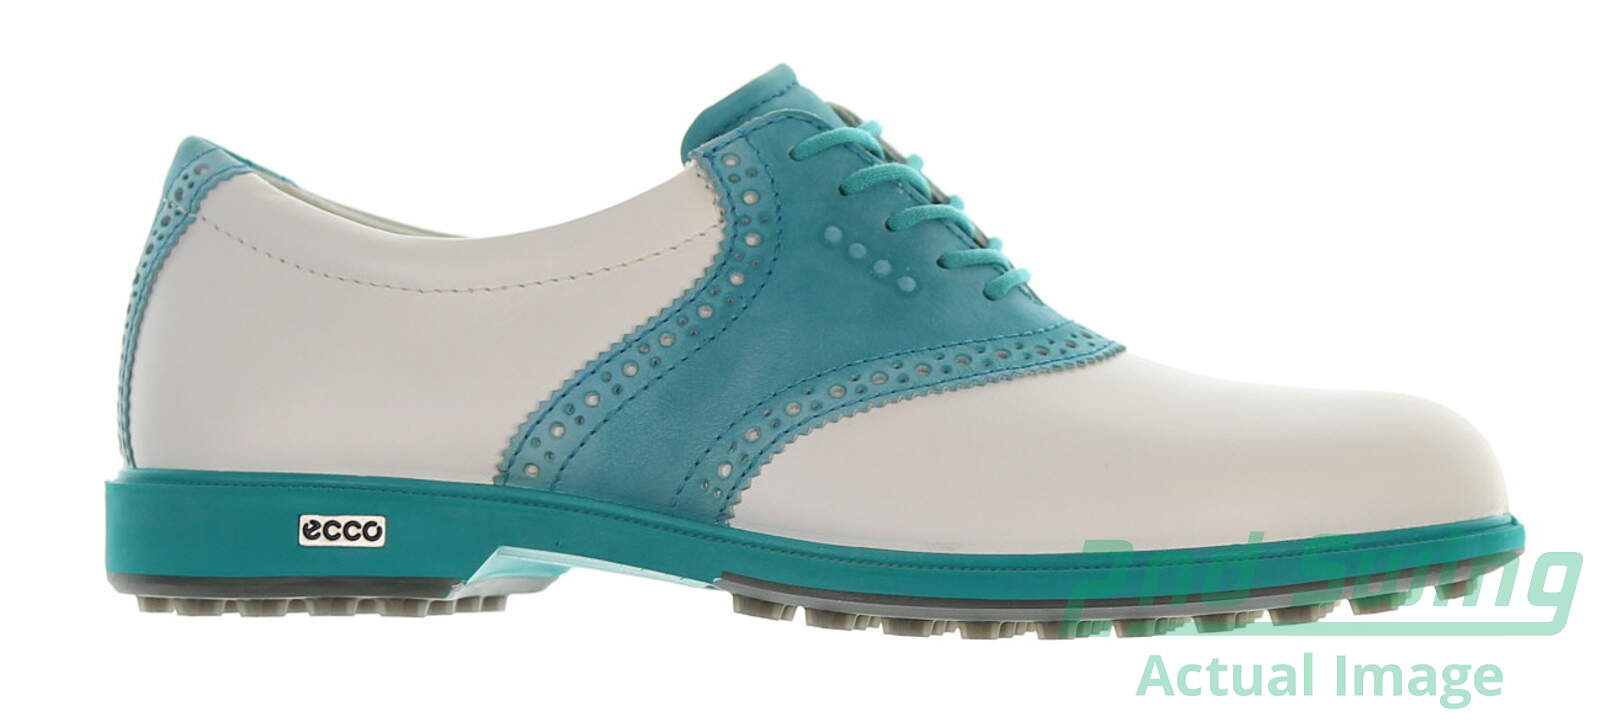 ecco ladies golf shoes